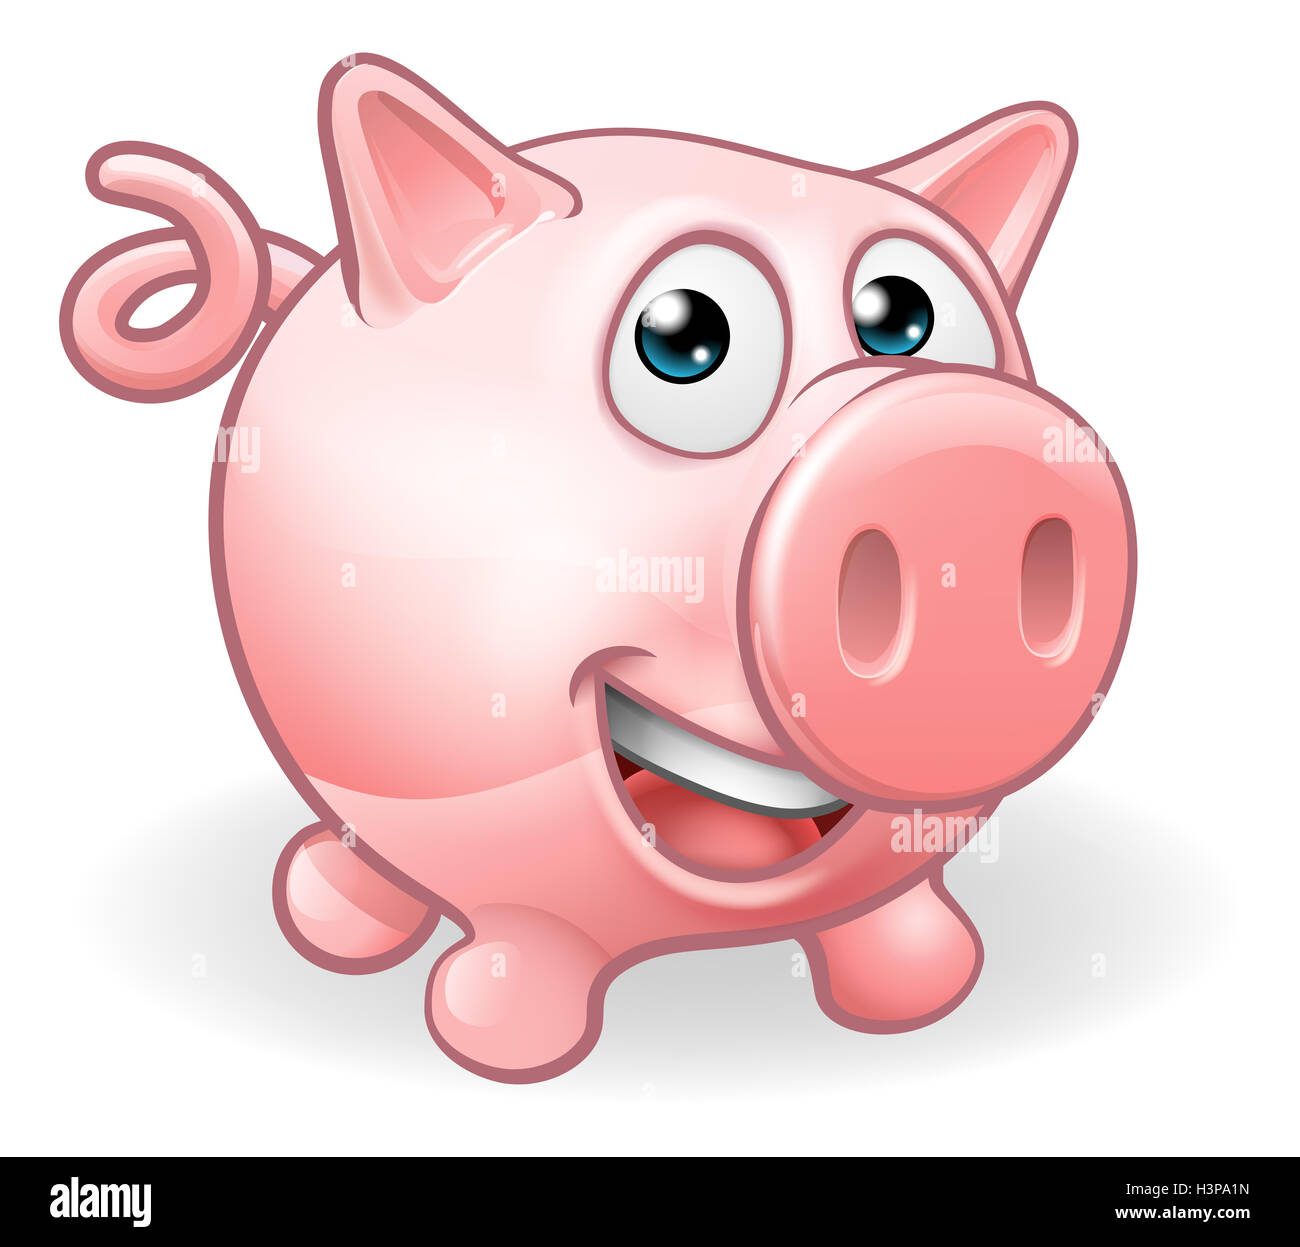 A cartoon cute pig farm animal character Stock Photo